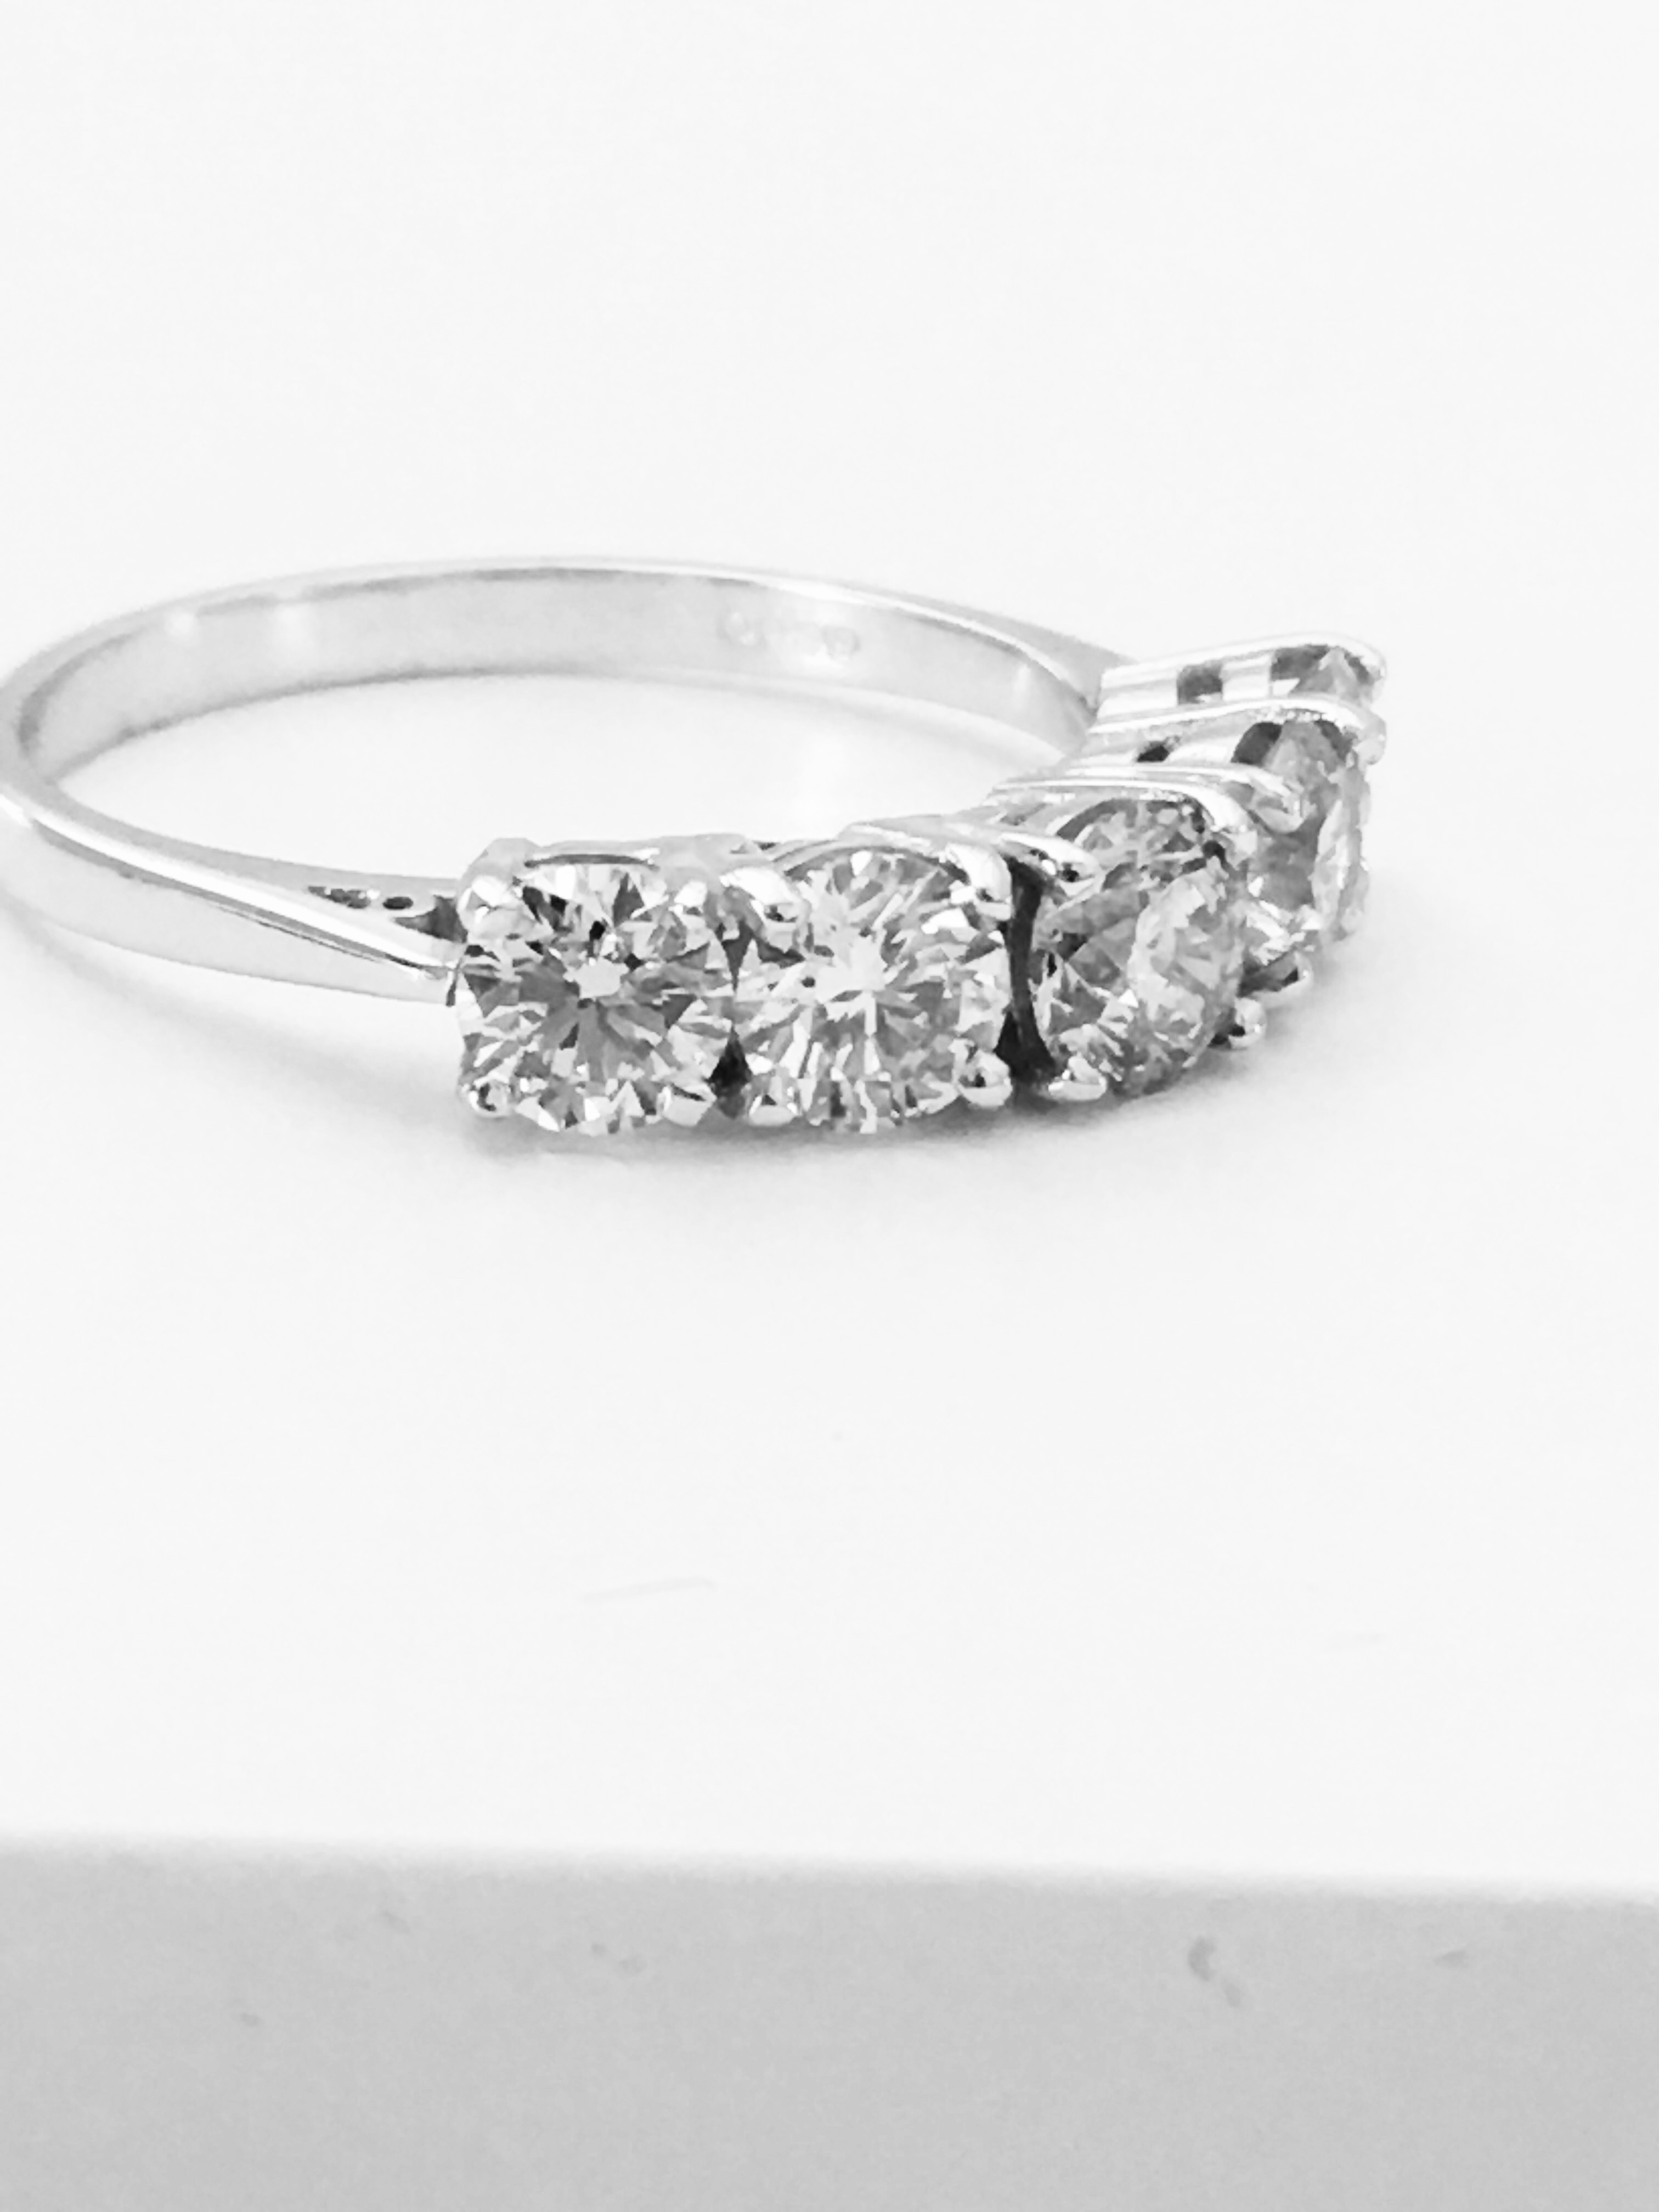 2.10ct diamon dfive stone Ring set in Platinum - Image 6 of 7